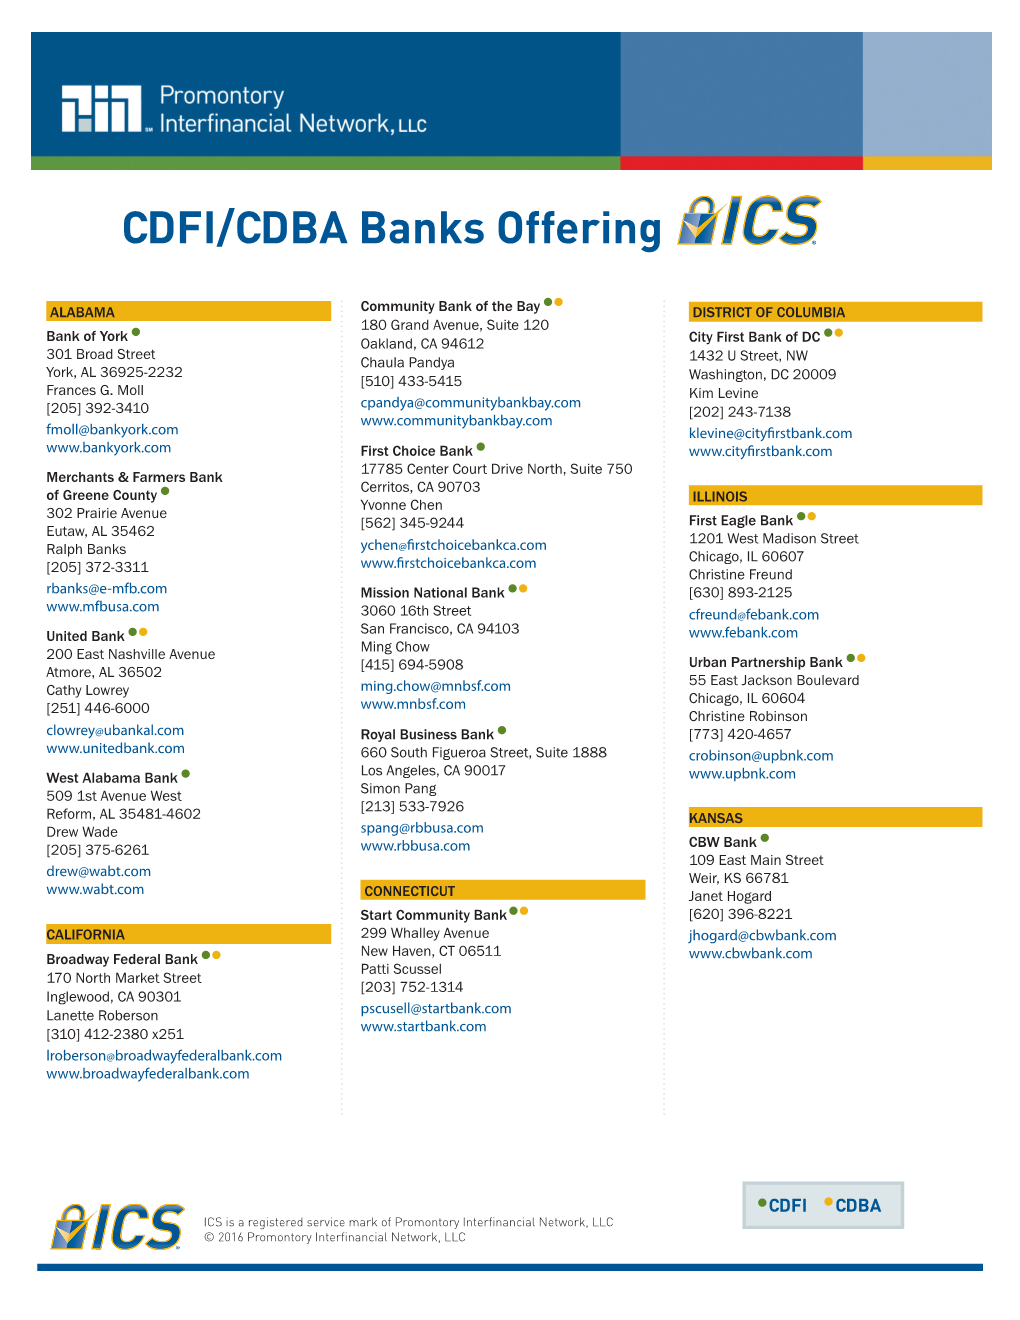 CDFI/CDBA Banks Offering